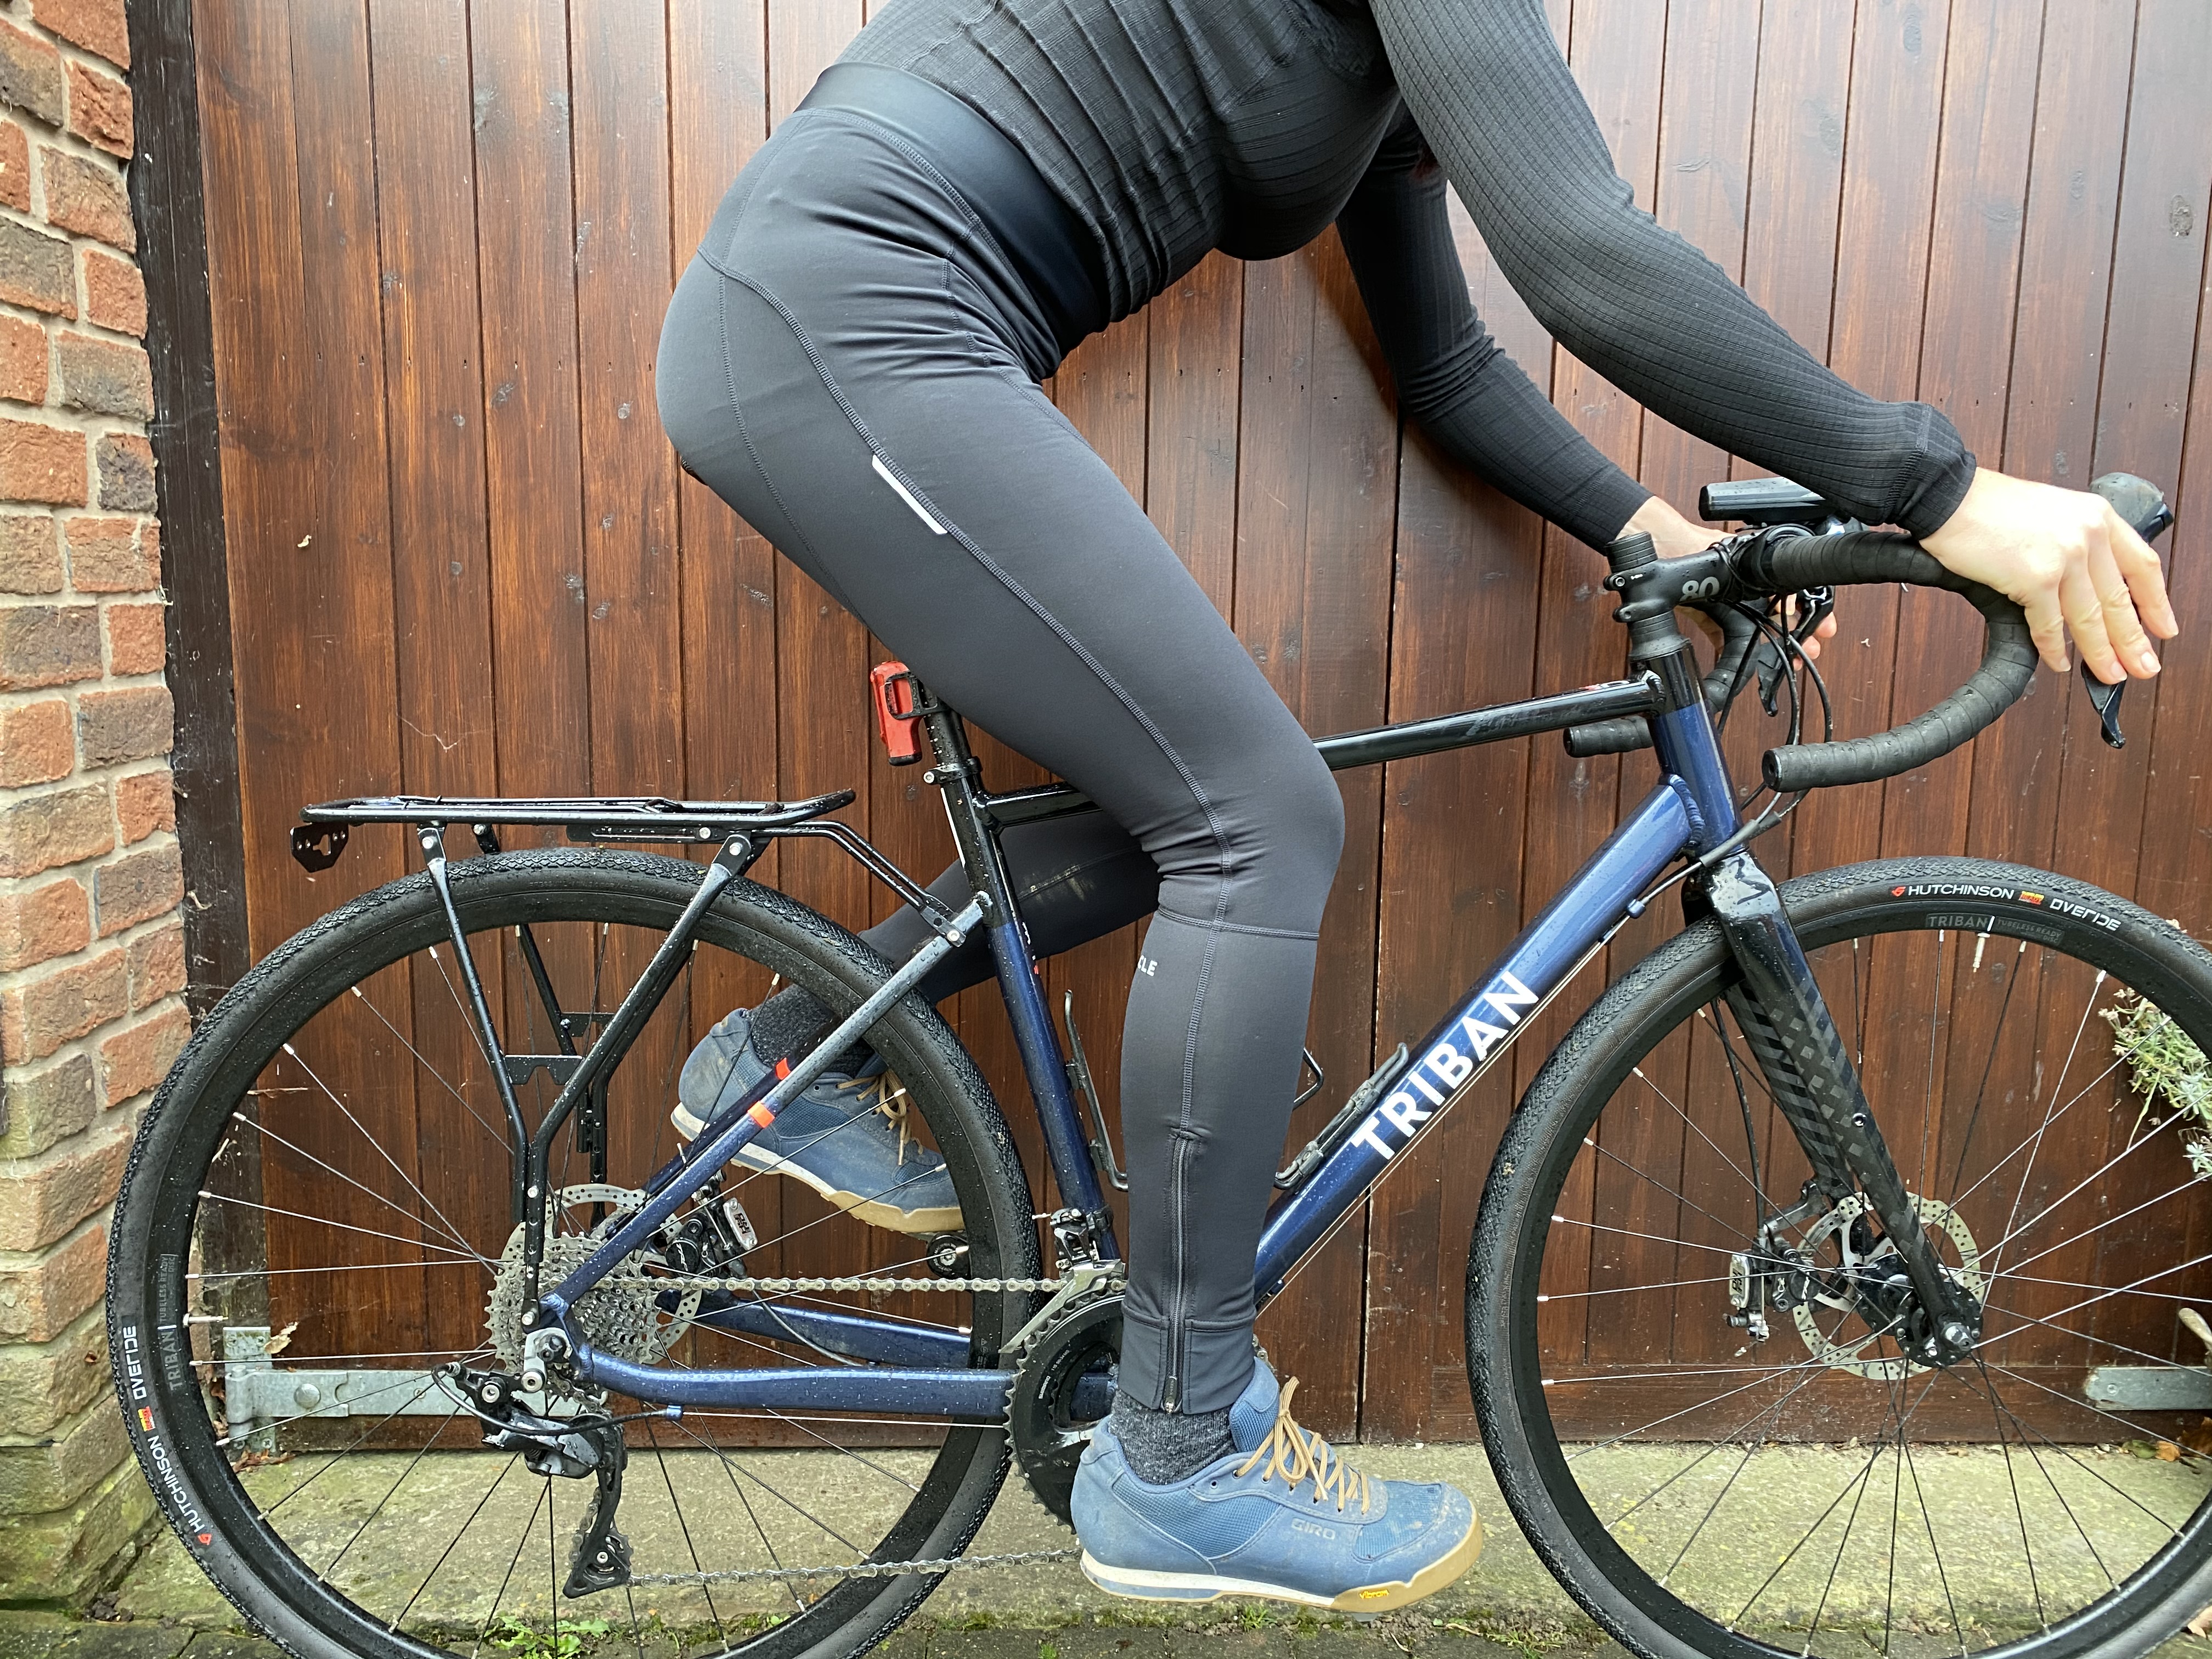 Nylon Lycra cycle shorts - sizes 1 to 3a